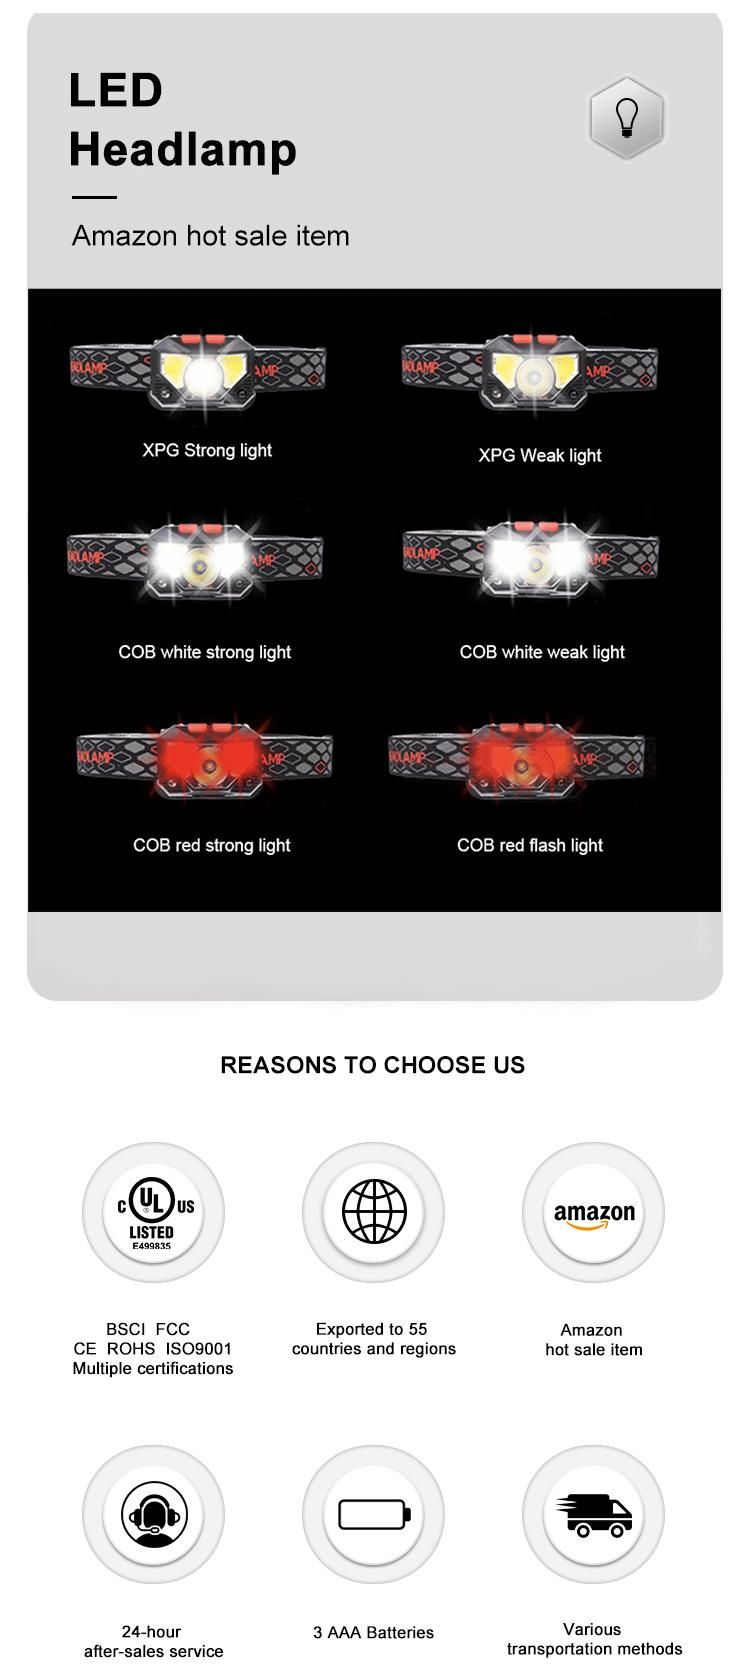 New LED Headlamp Flashlight 1000 Lumens USB Rechargeable Headlight Waterproof Head Lights with Motion Sensor